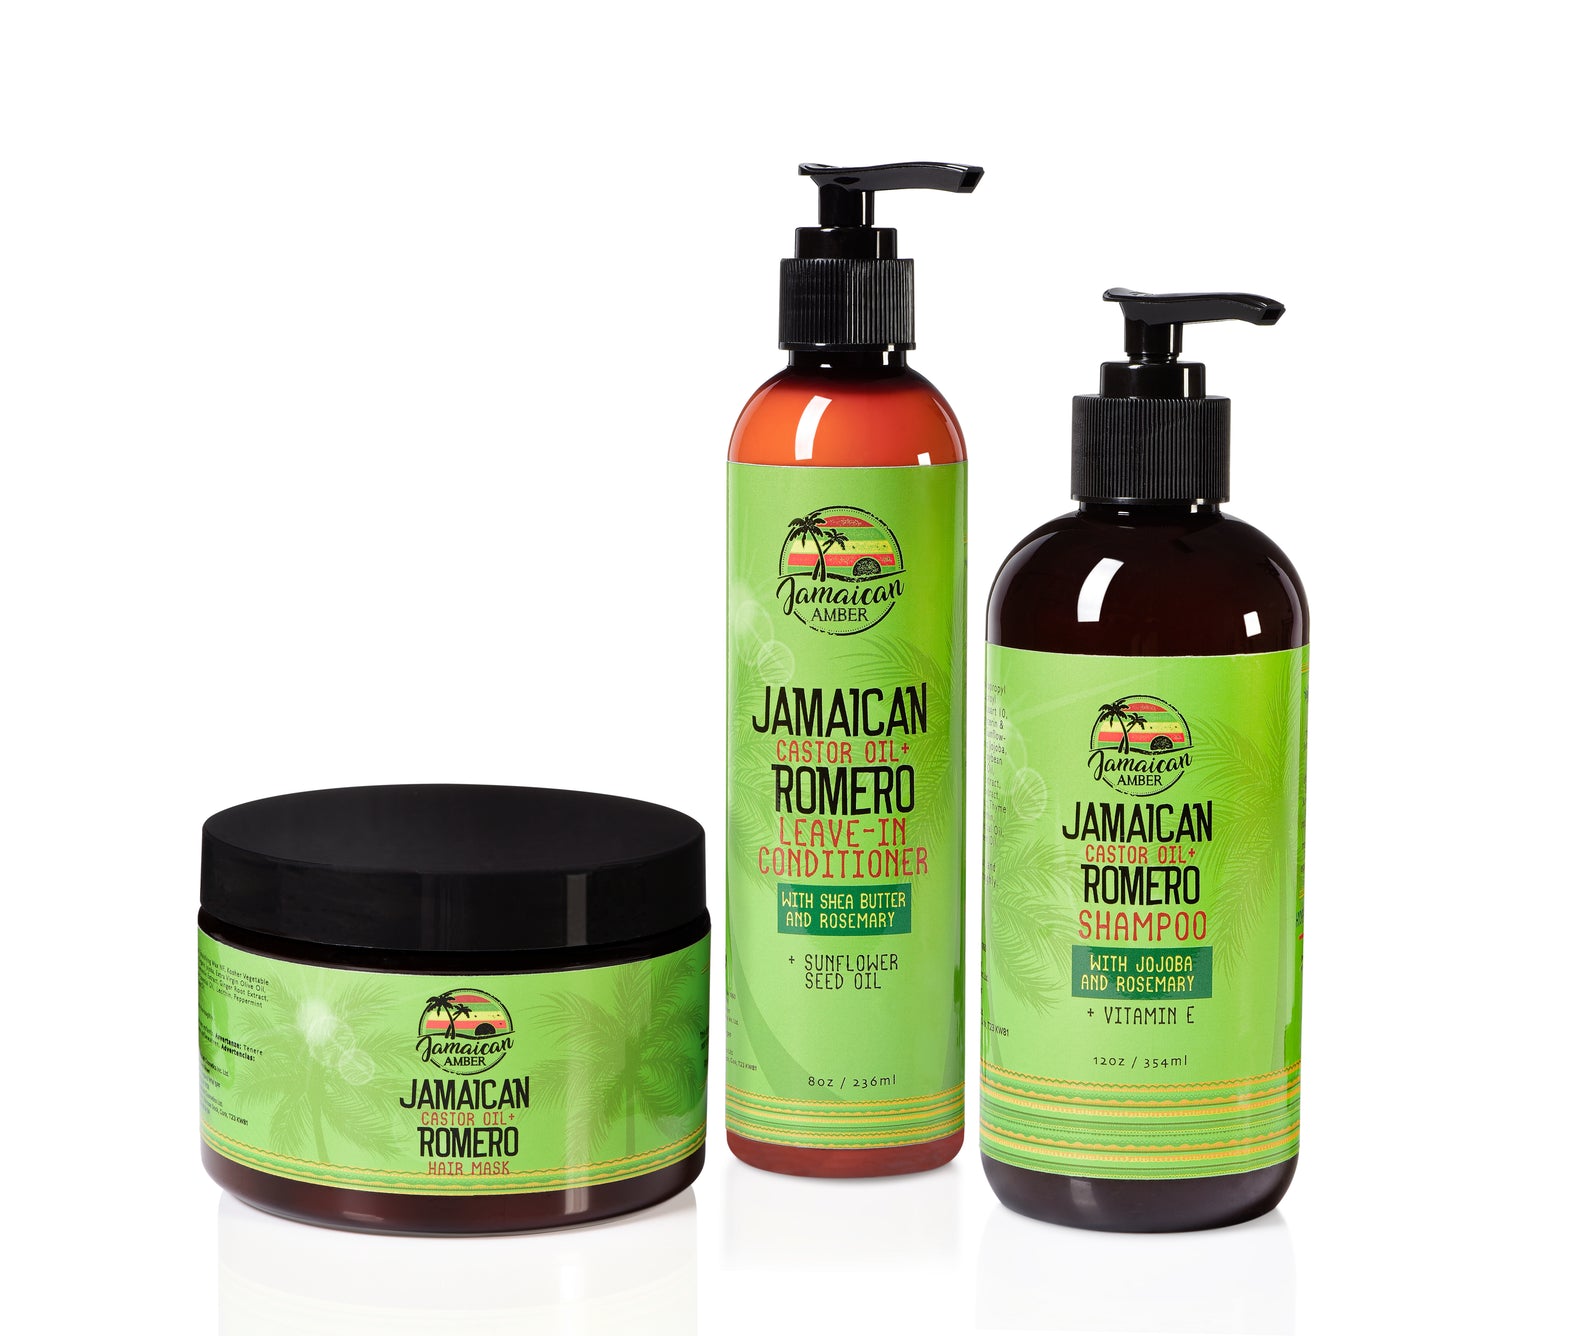 Jamaican Romero Hair Maintenance Kit Mitchell Brands - Mitchell Brands - Skin Lightening, Skin Brightening, Fade Dark Spots, Shea Butter, Hair Growth Products